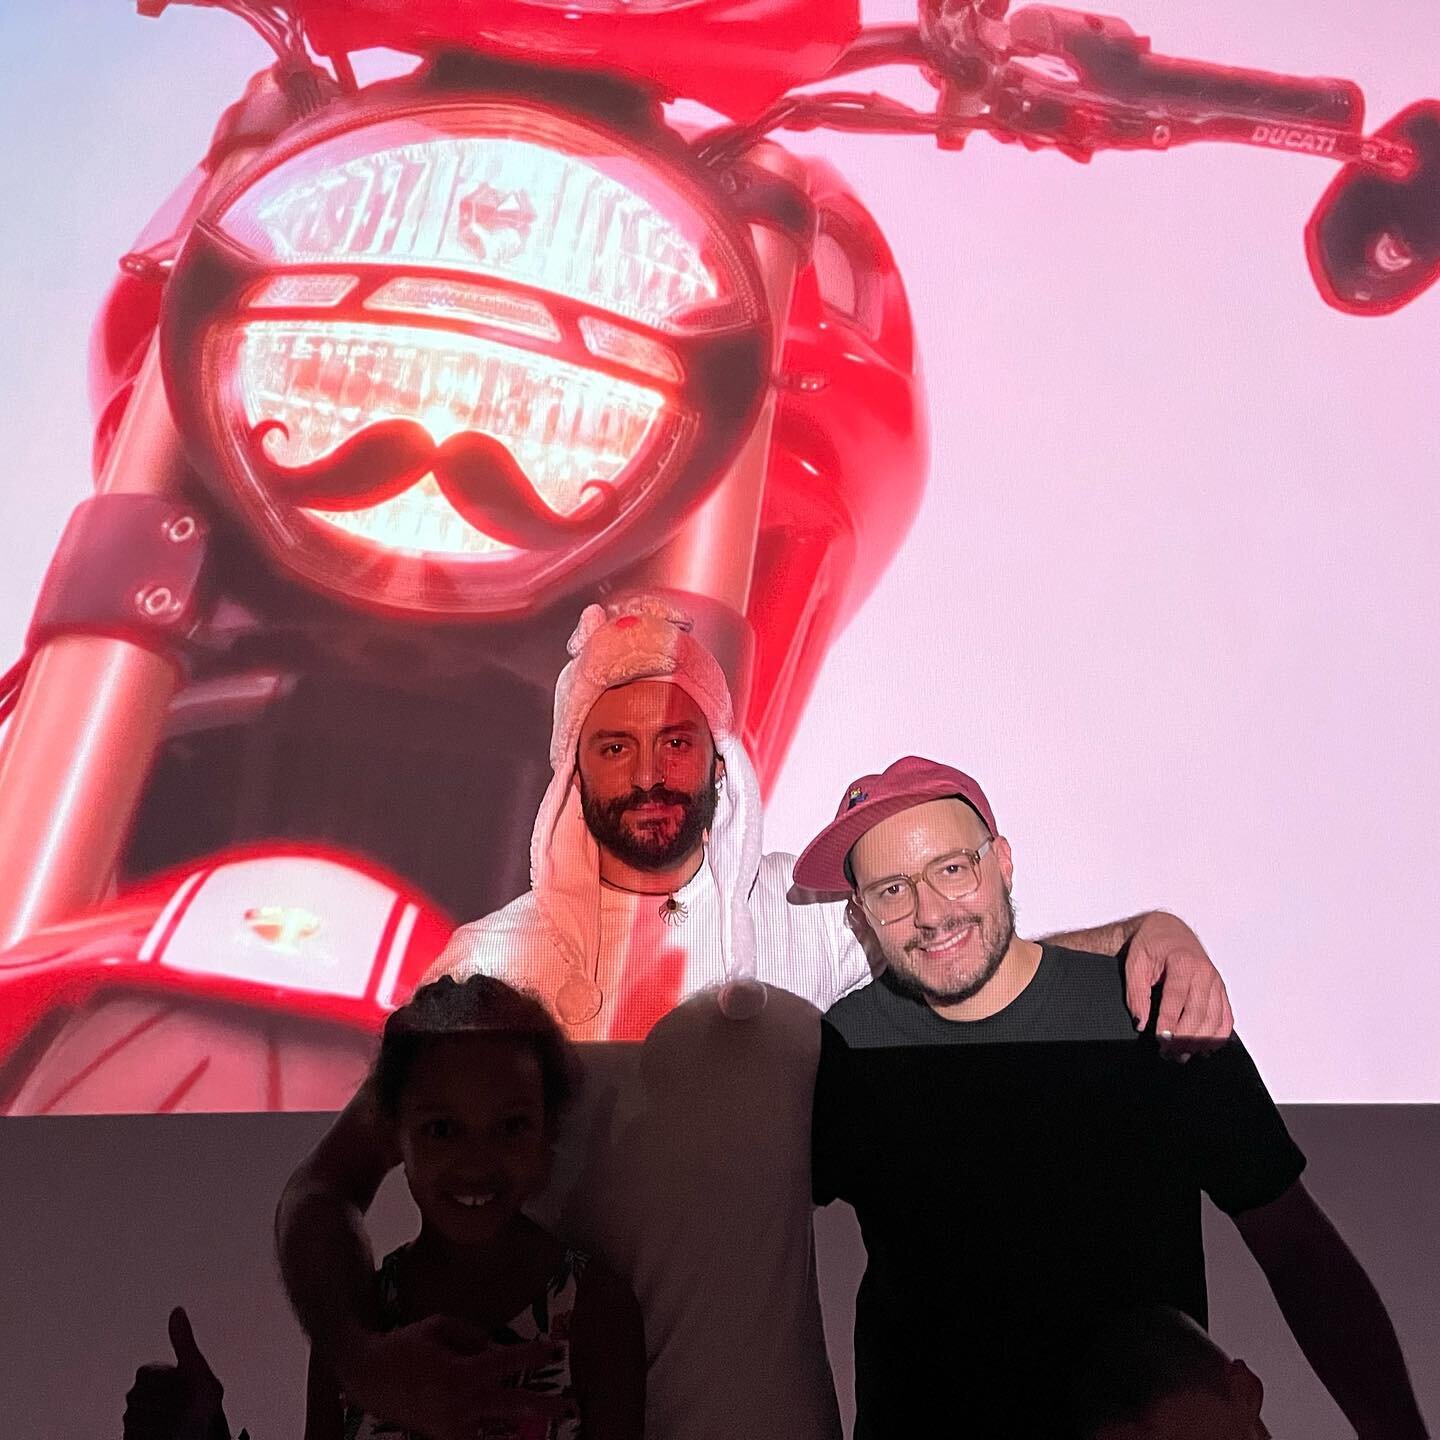 Ducati Monster 78
.
.
#newyork -#newvideo  #ducatimonster -#aeranoid  #seasons #whammy #motocross #giusciandrone #lucasciamdrone #saturninoeyewear 

Grazie al grande @duc_78 ❤️ e grazie per le mele rosse, poi le mele verdi.. poi &hellip;

Video Link 